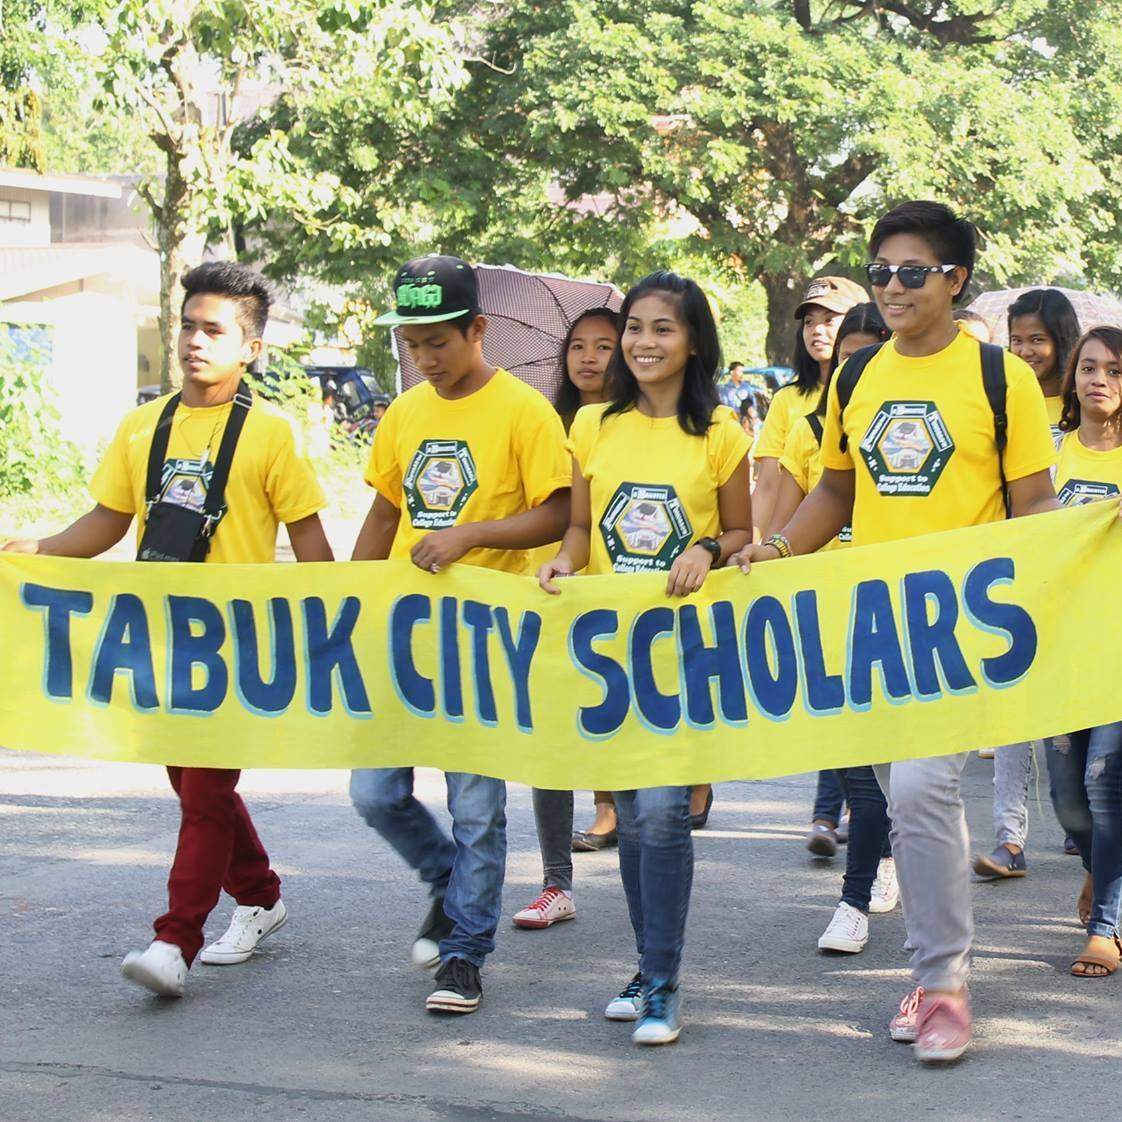 Tabuk City Scholars